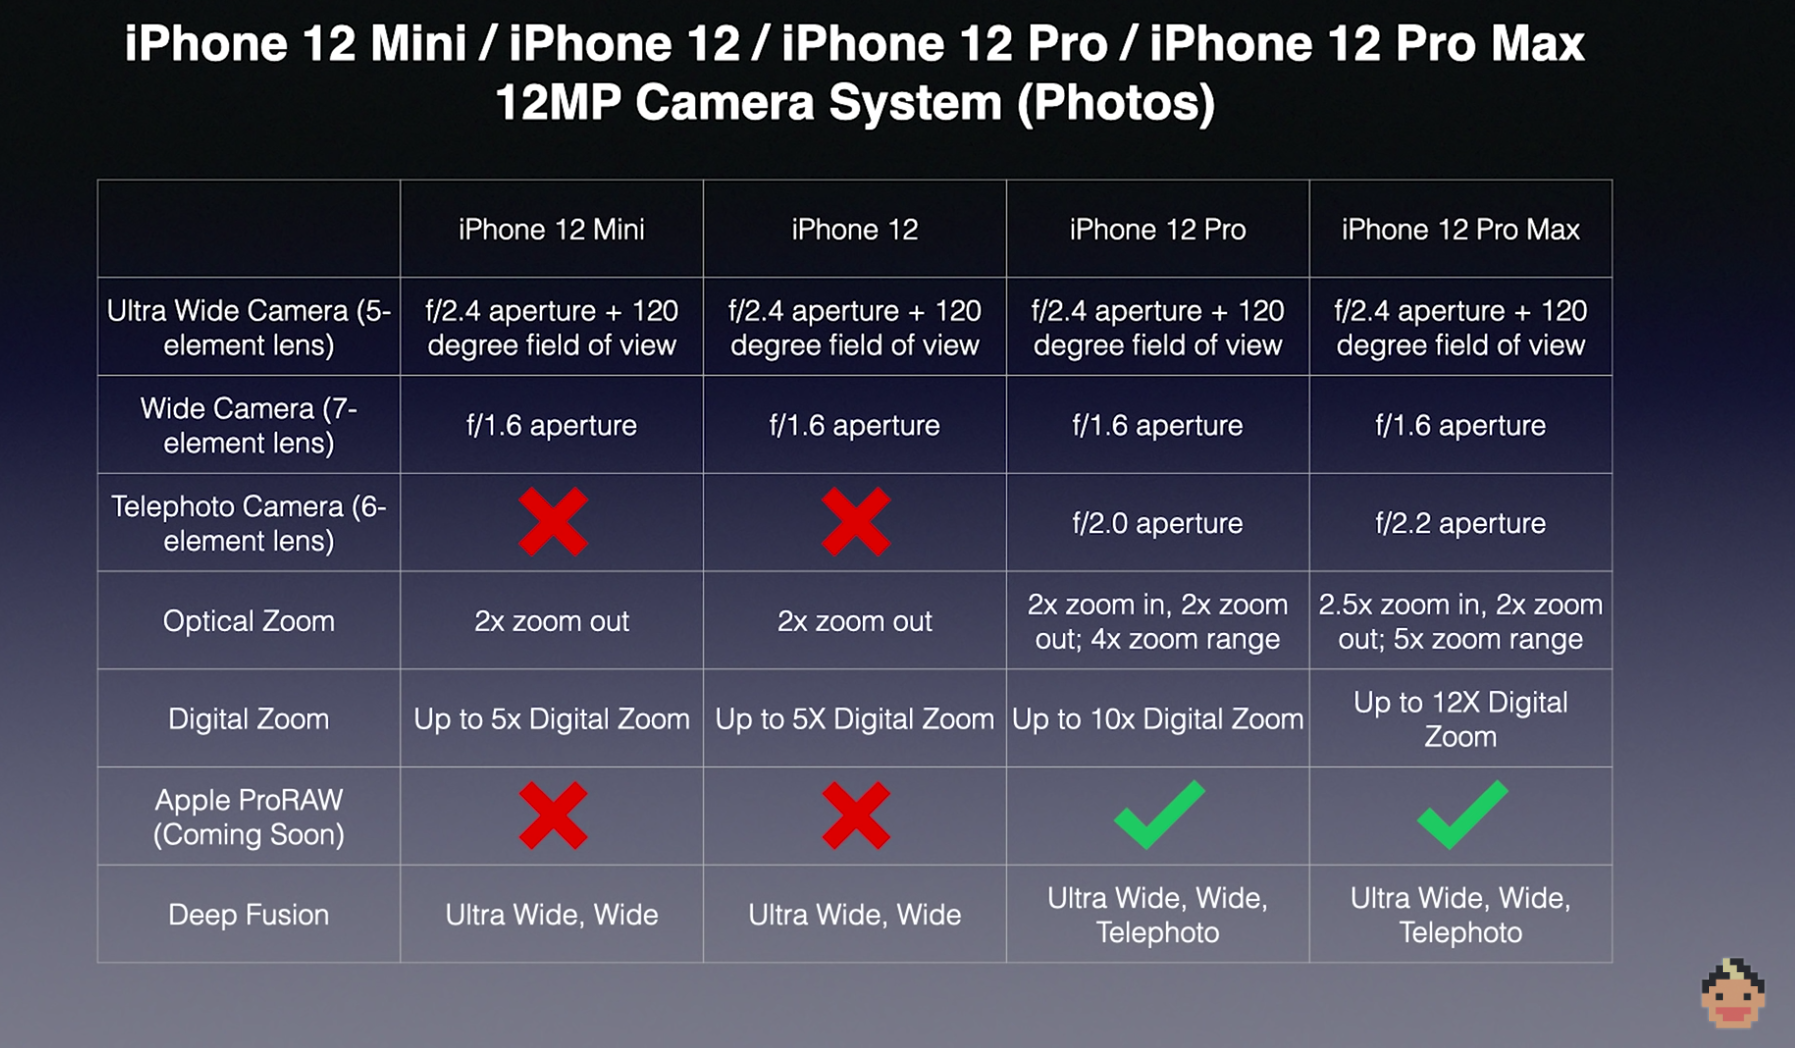 iPhone 12 Mini / iPhone 12 / iPhone 12 Pro / iPhone 12 Pro Max 12MP Camera System (Photos) comparison table